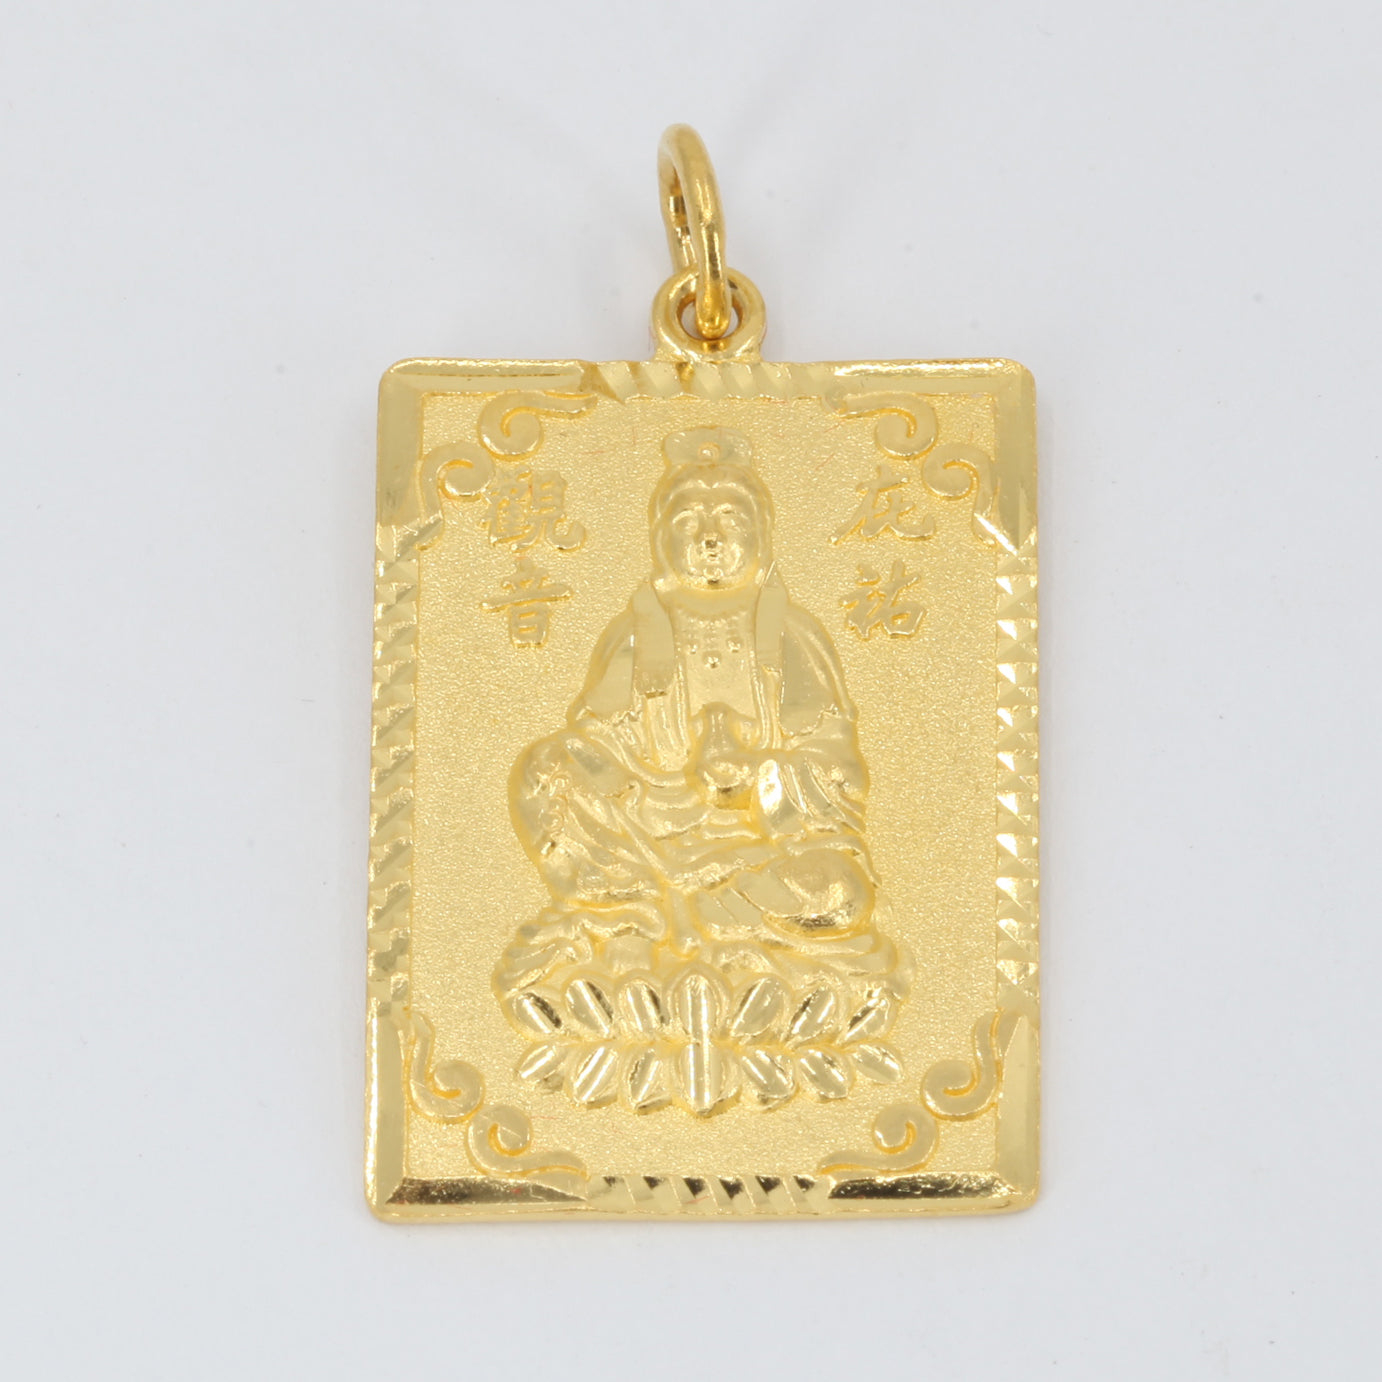 24K Solid Yellow Gold Rectangular Guan Yin Pendant 17.7 Grams